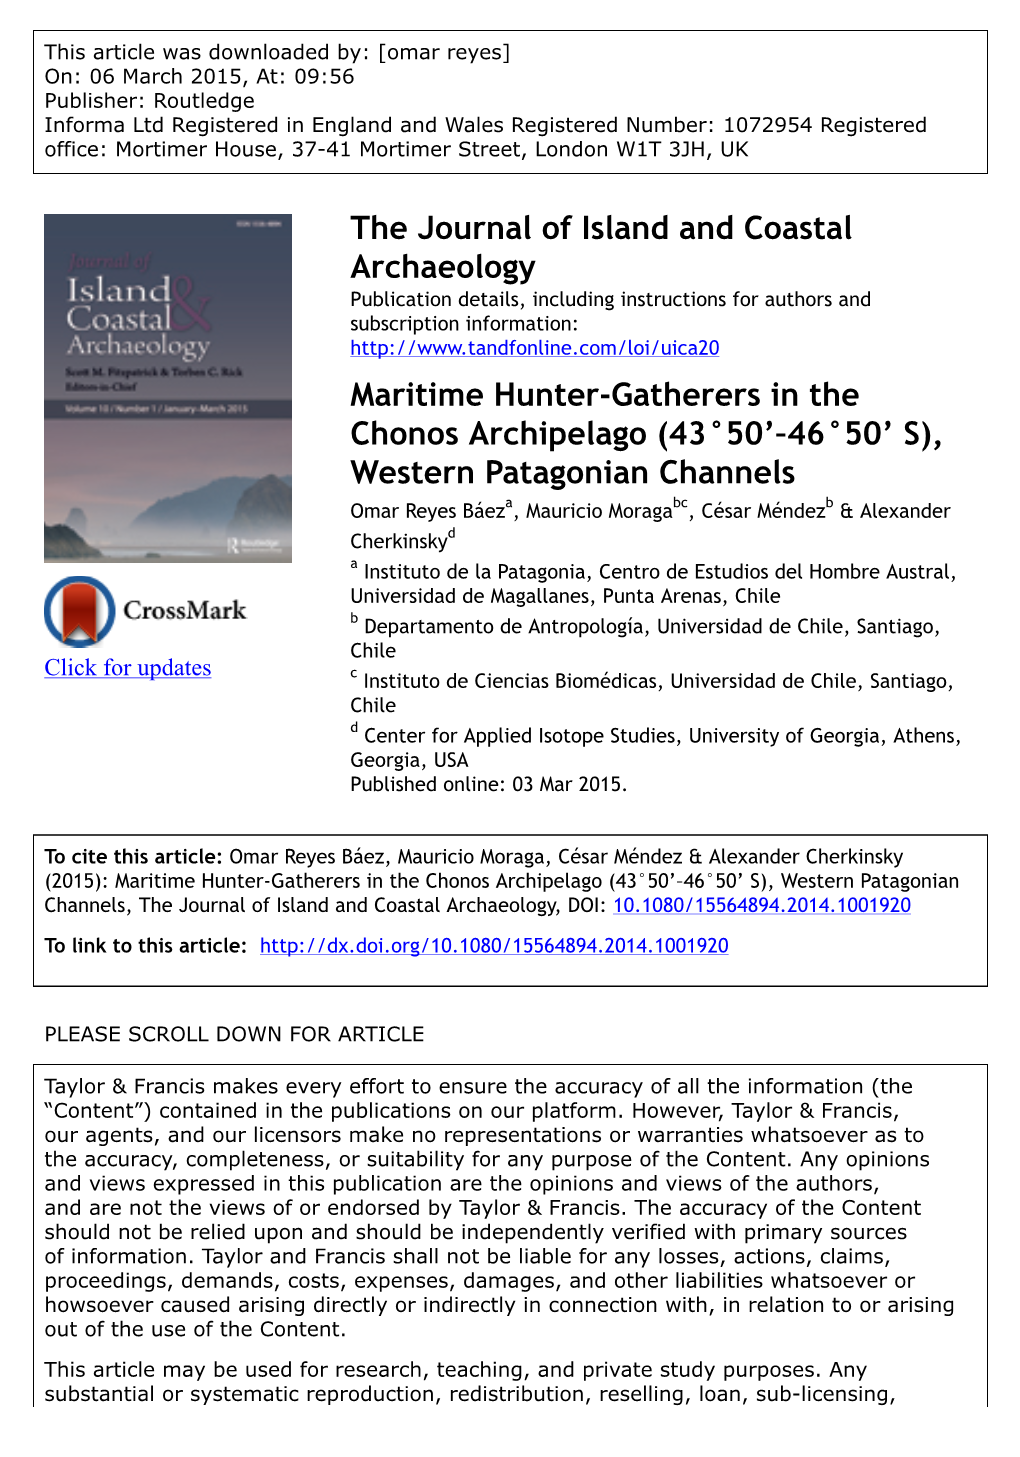 Maritime Hunter-Gatherers in the Chonos Archipelago